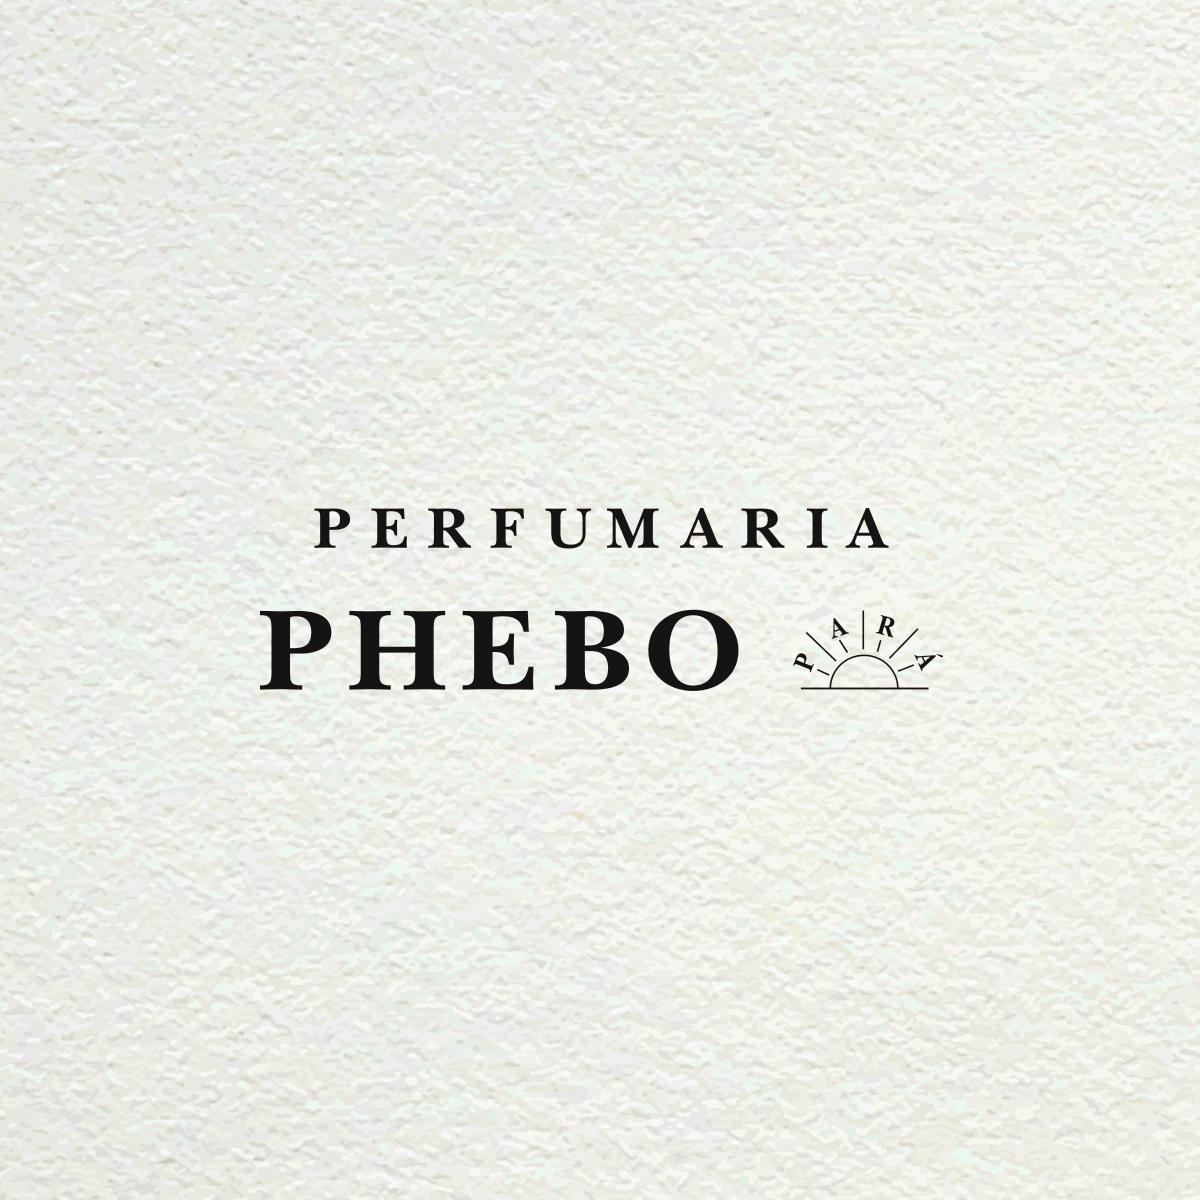 granado pharmácias perfumaria phebo Granado Phebo campanha online offline Email banner post